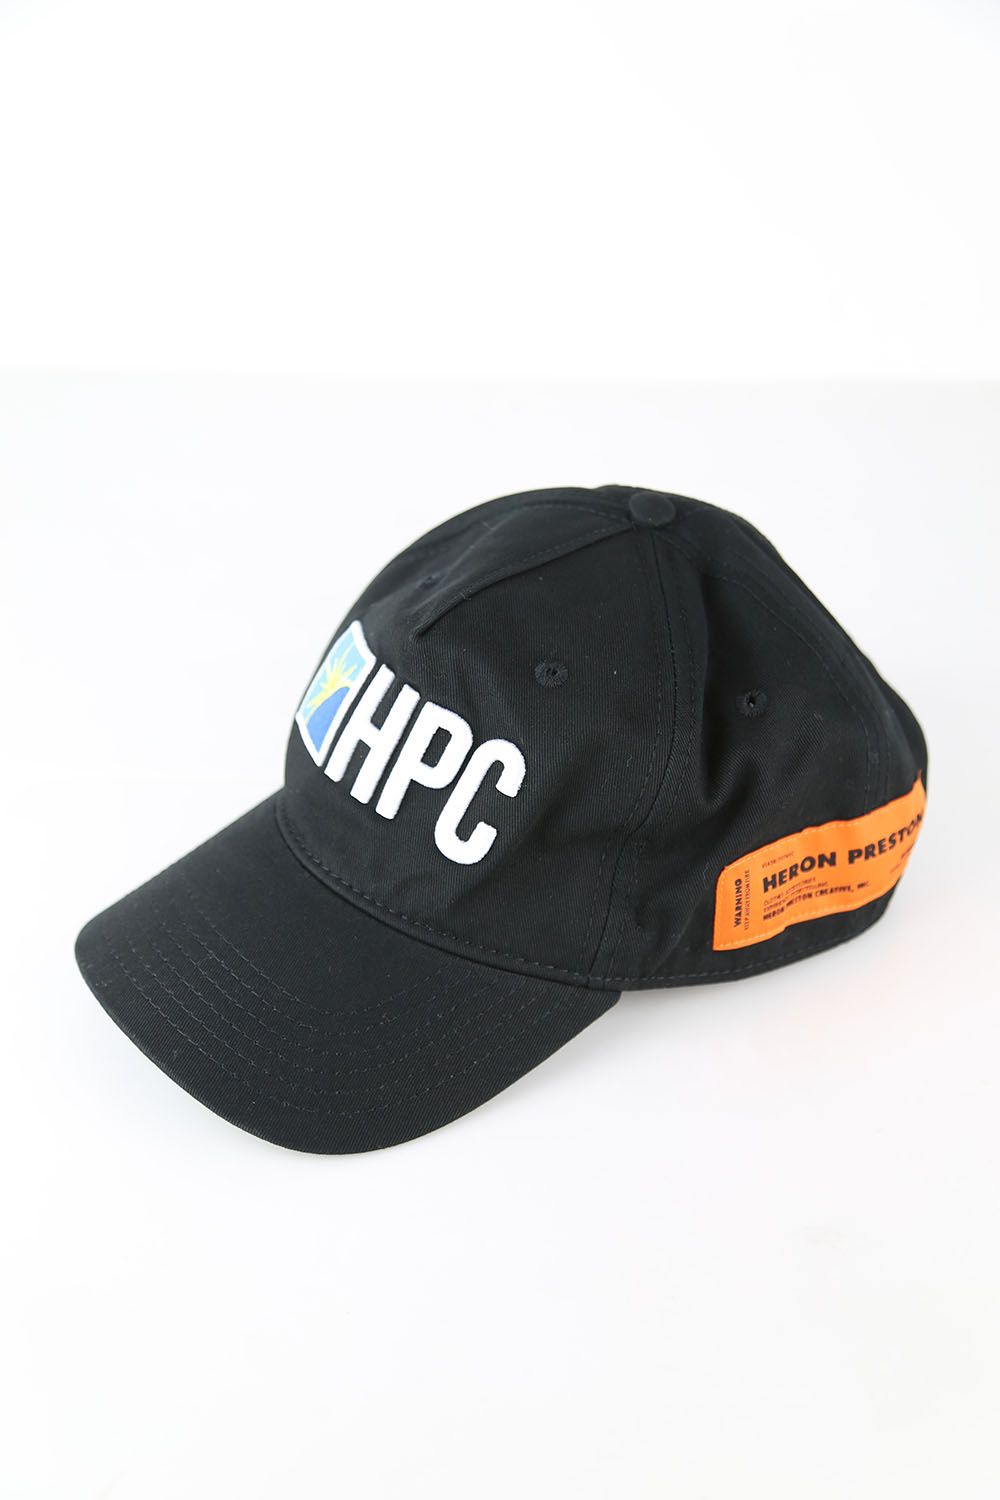 HERON PRESTON - BASEBALL CAP HPC / ブラック×ホワイト